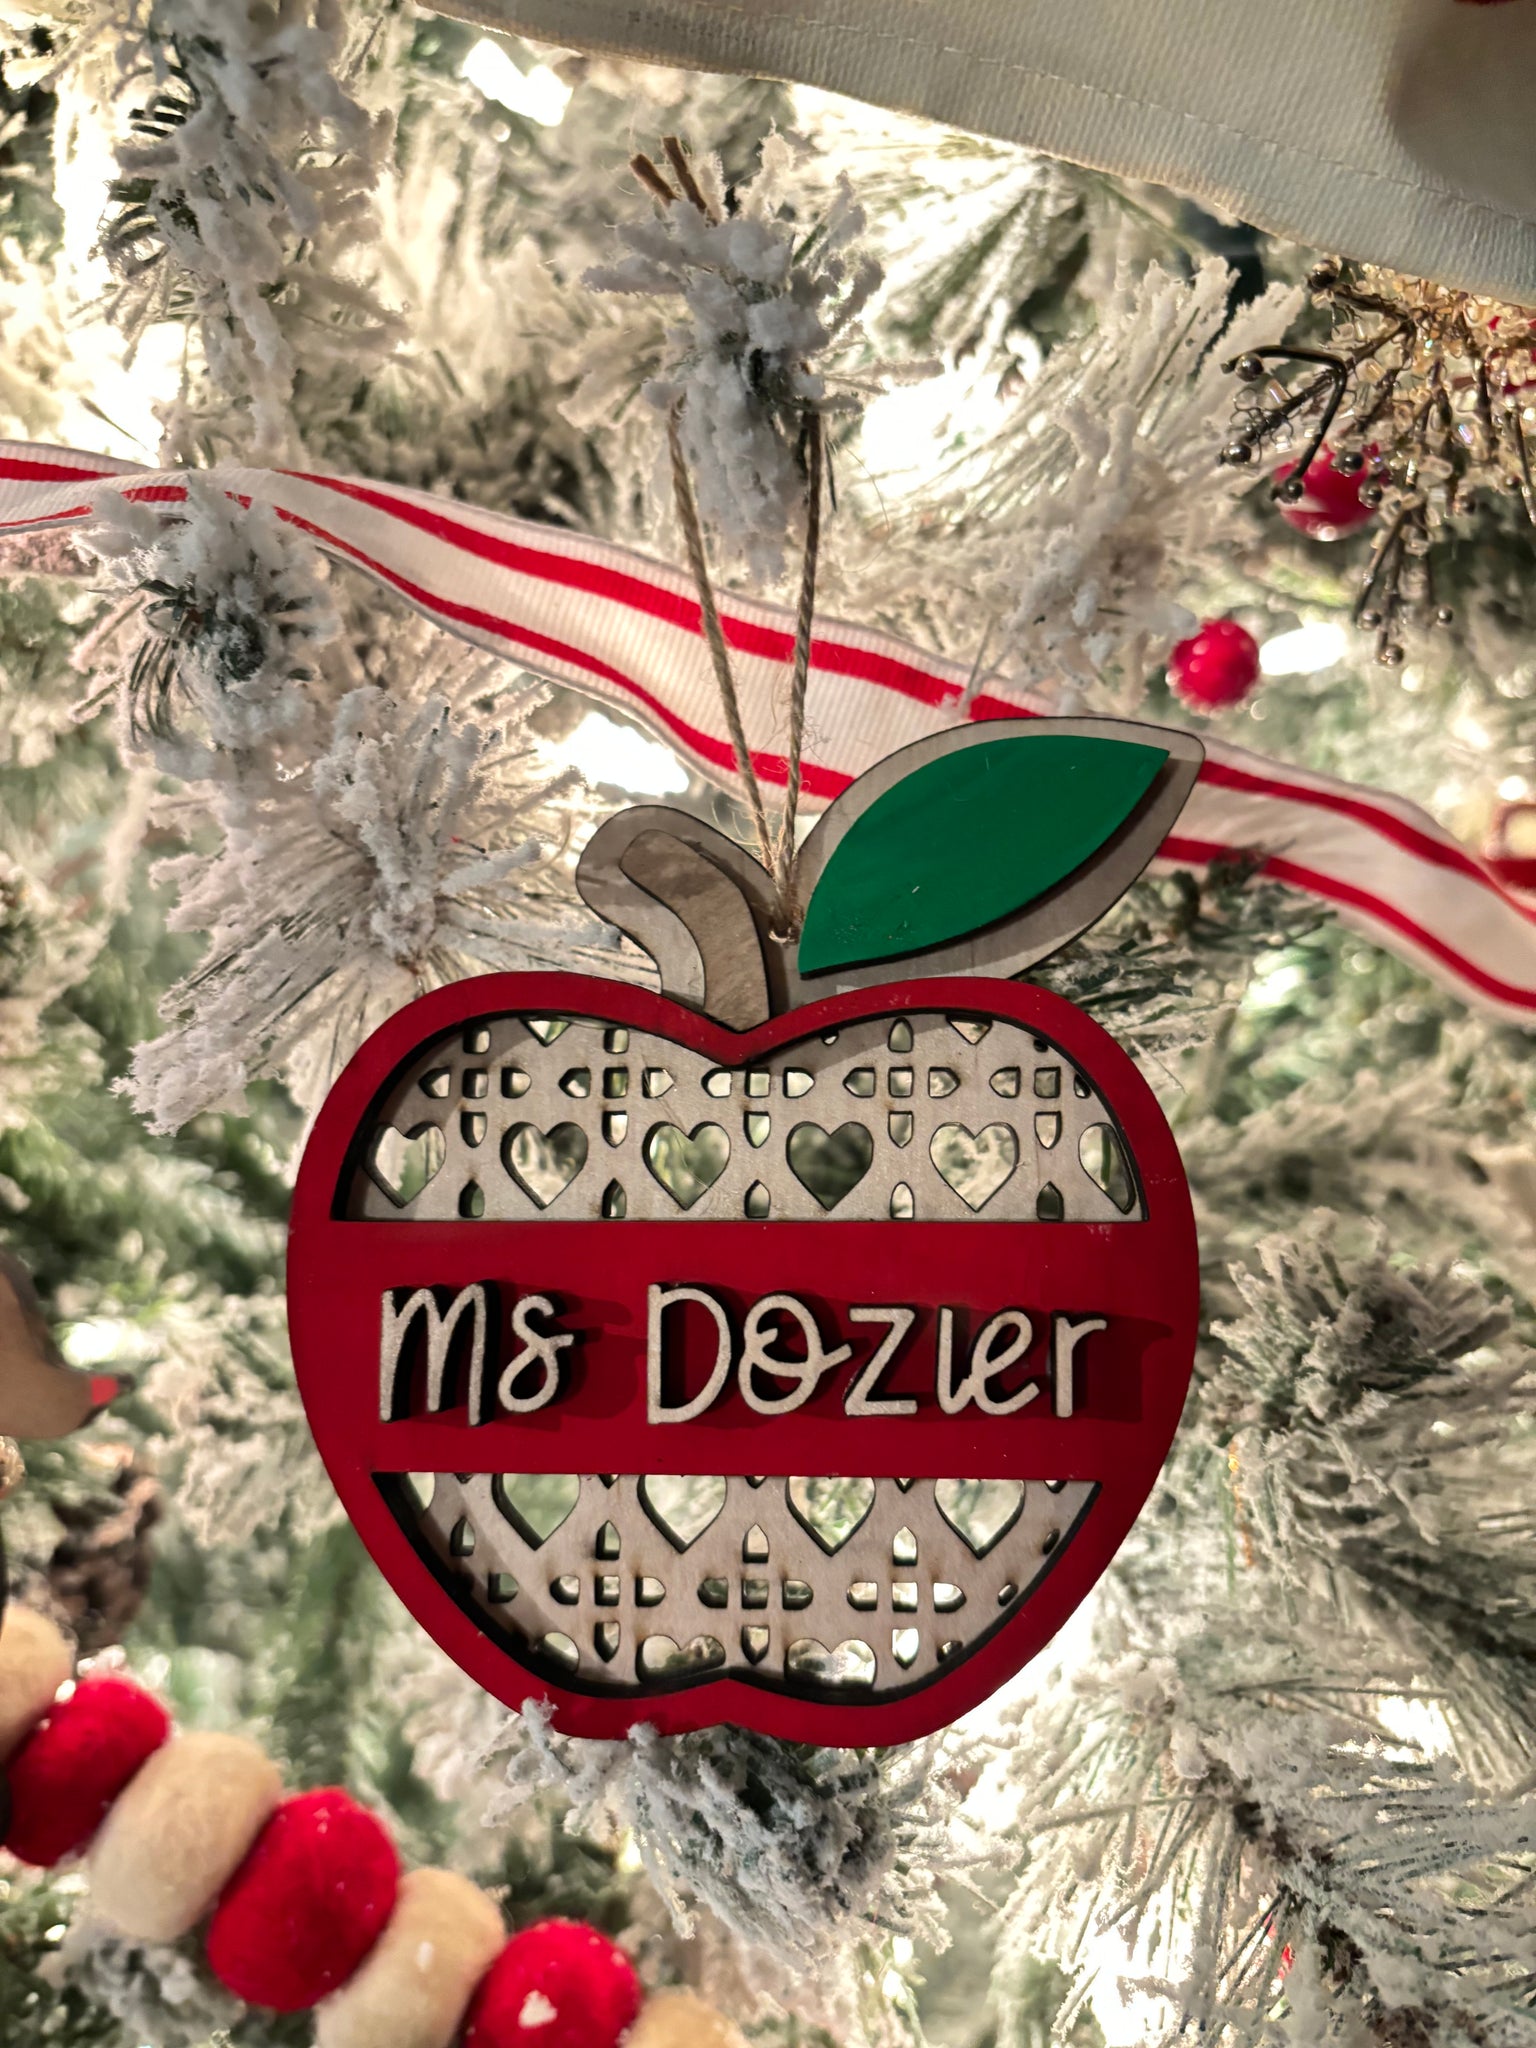 Teacher ornament